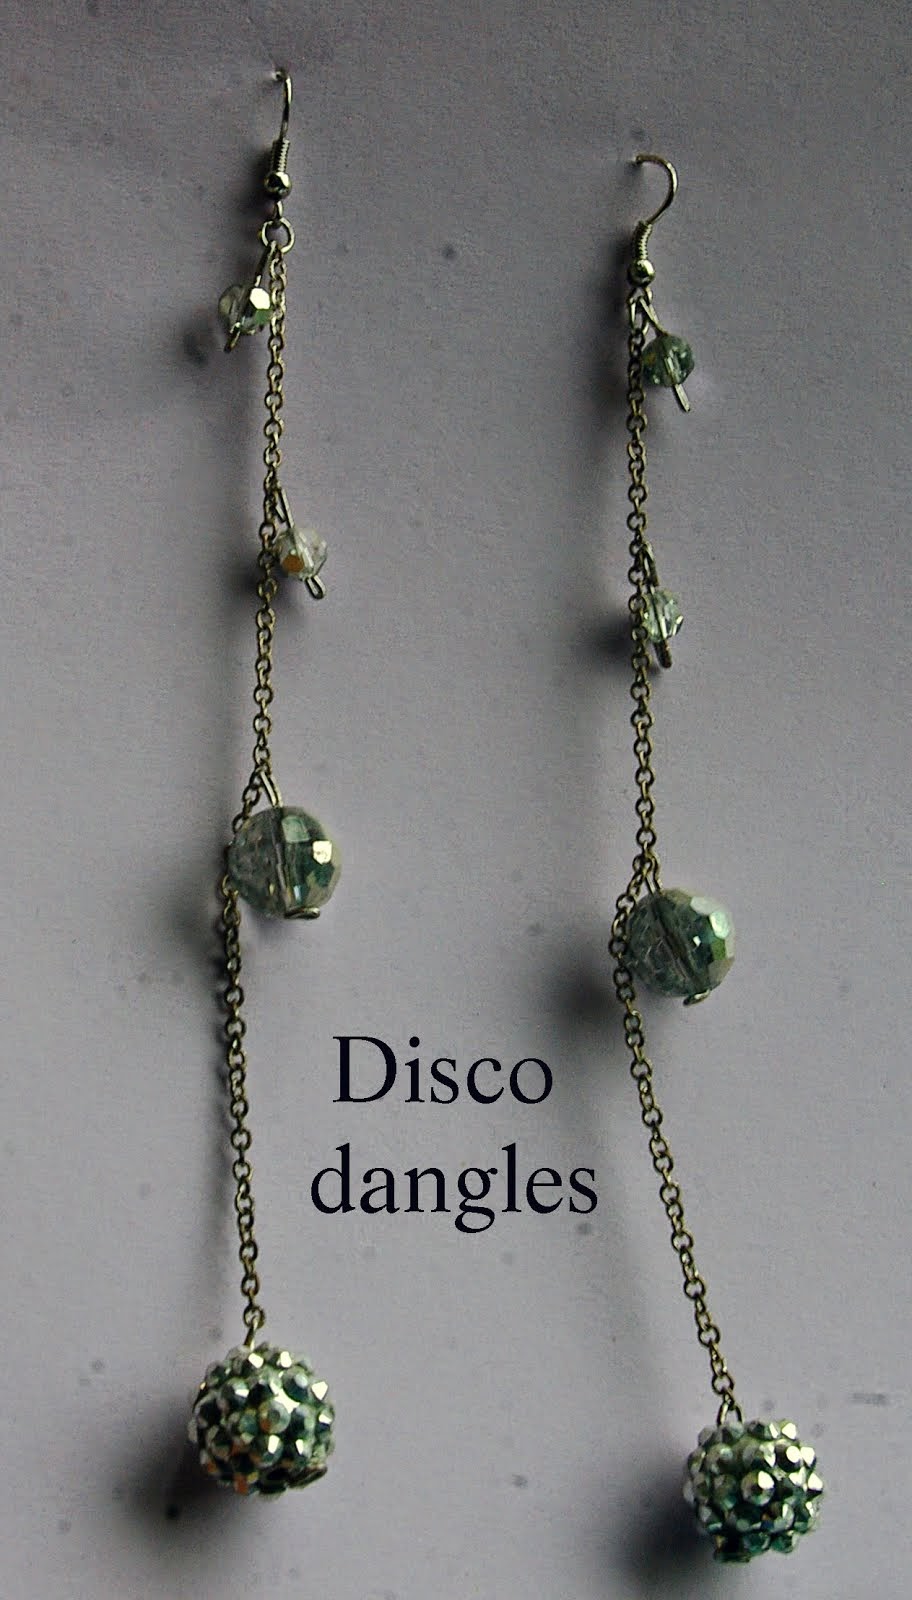 Disco dangle earrings